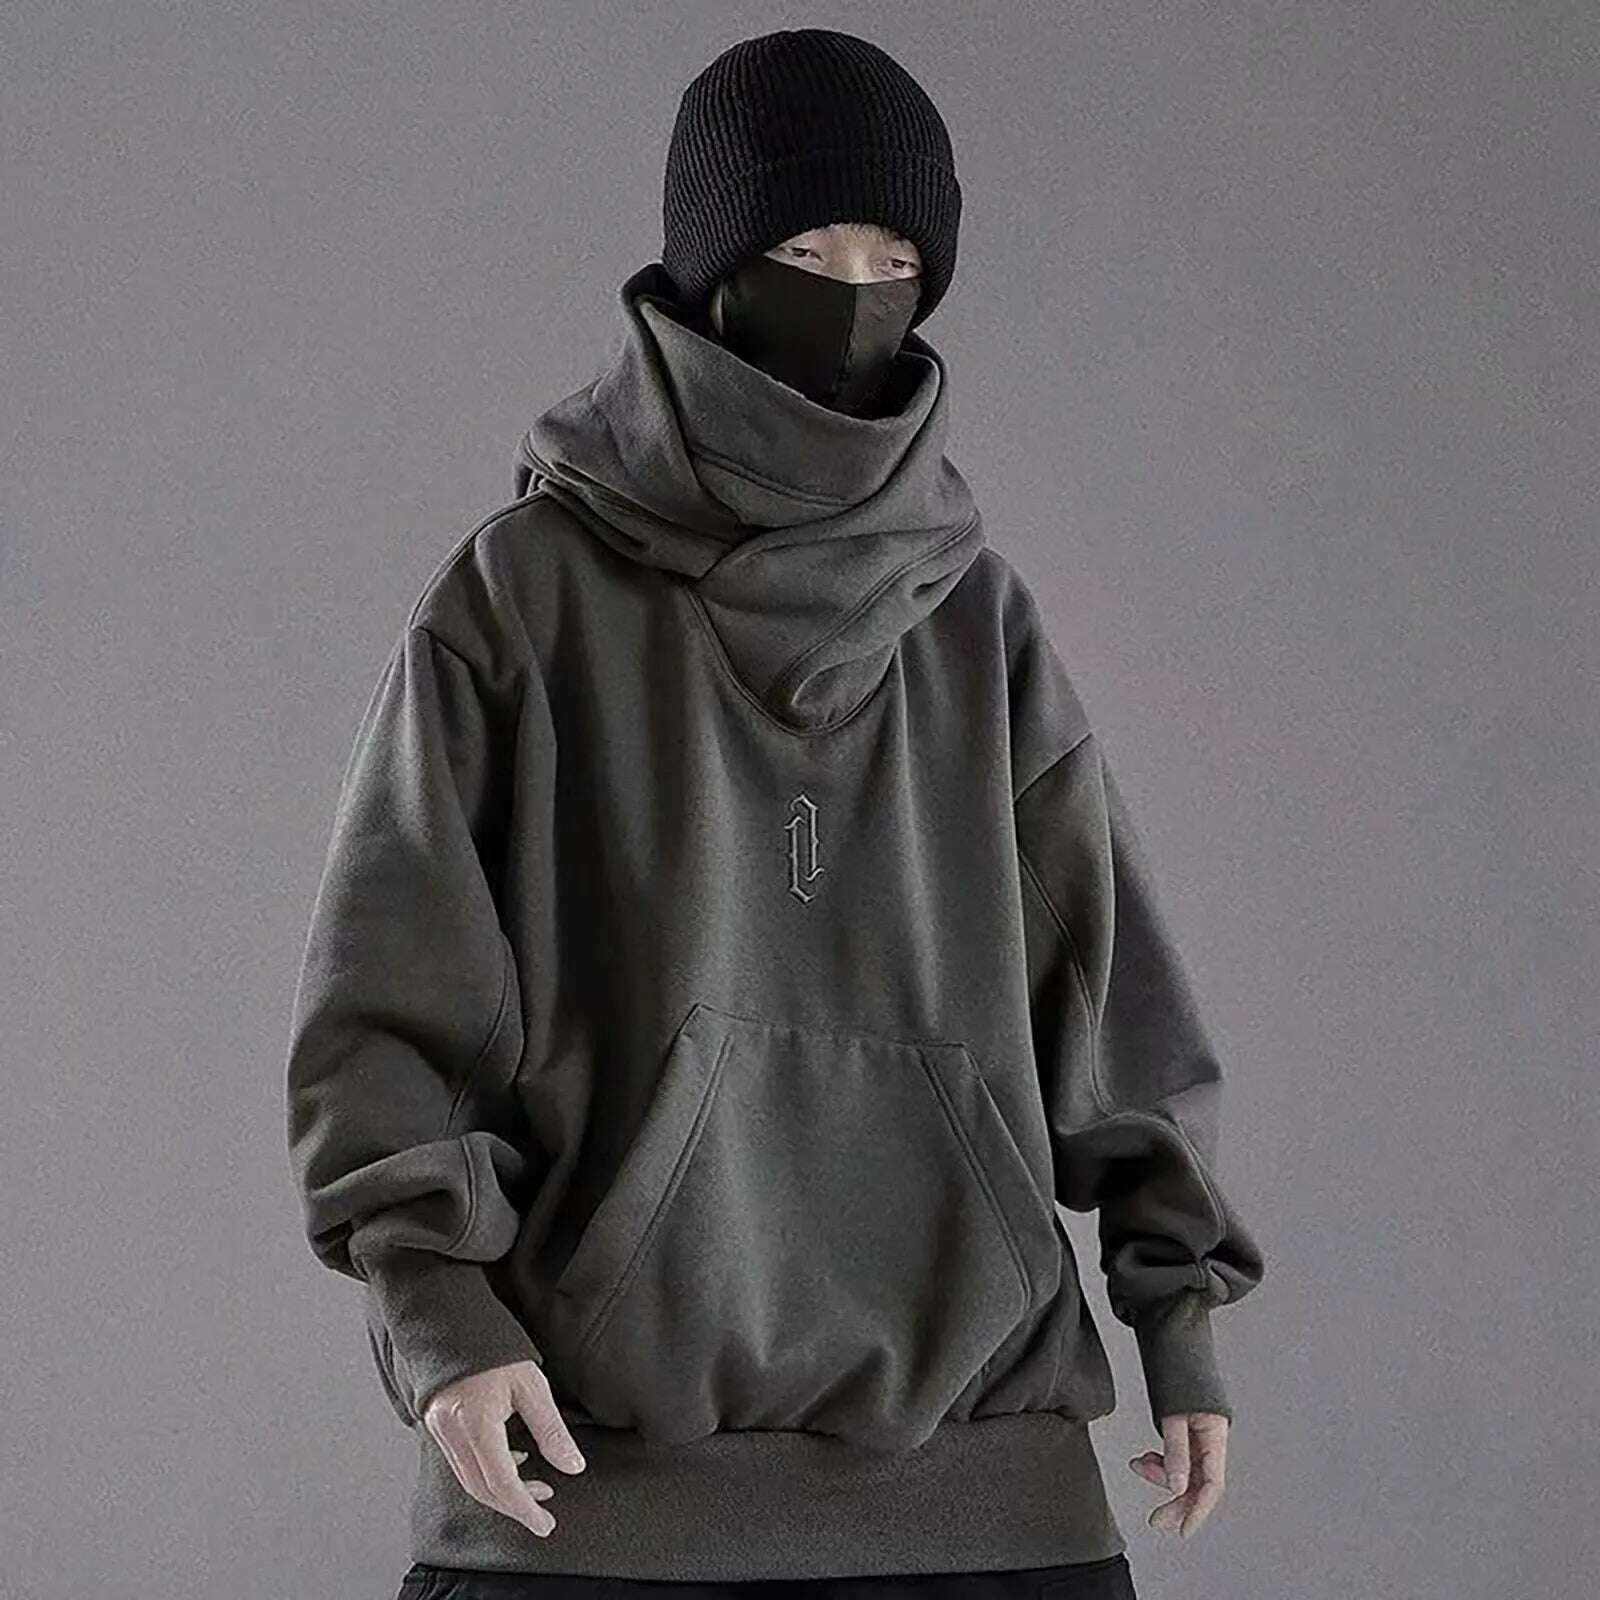 KIMLUD, Sweatshirt For Men Male Ninja Style Japanese Hoodie Autumn Winter Solid Turtleneck Long Sleeve Hoodie Pocket Punk Oversize Tops, Grey / XXL / United States, KIMLUD Womens Clothes